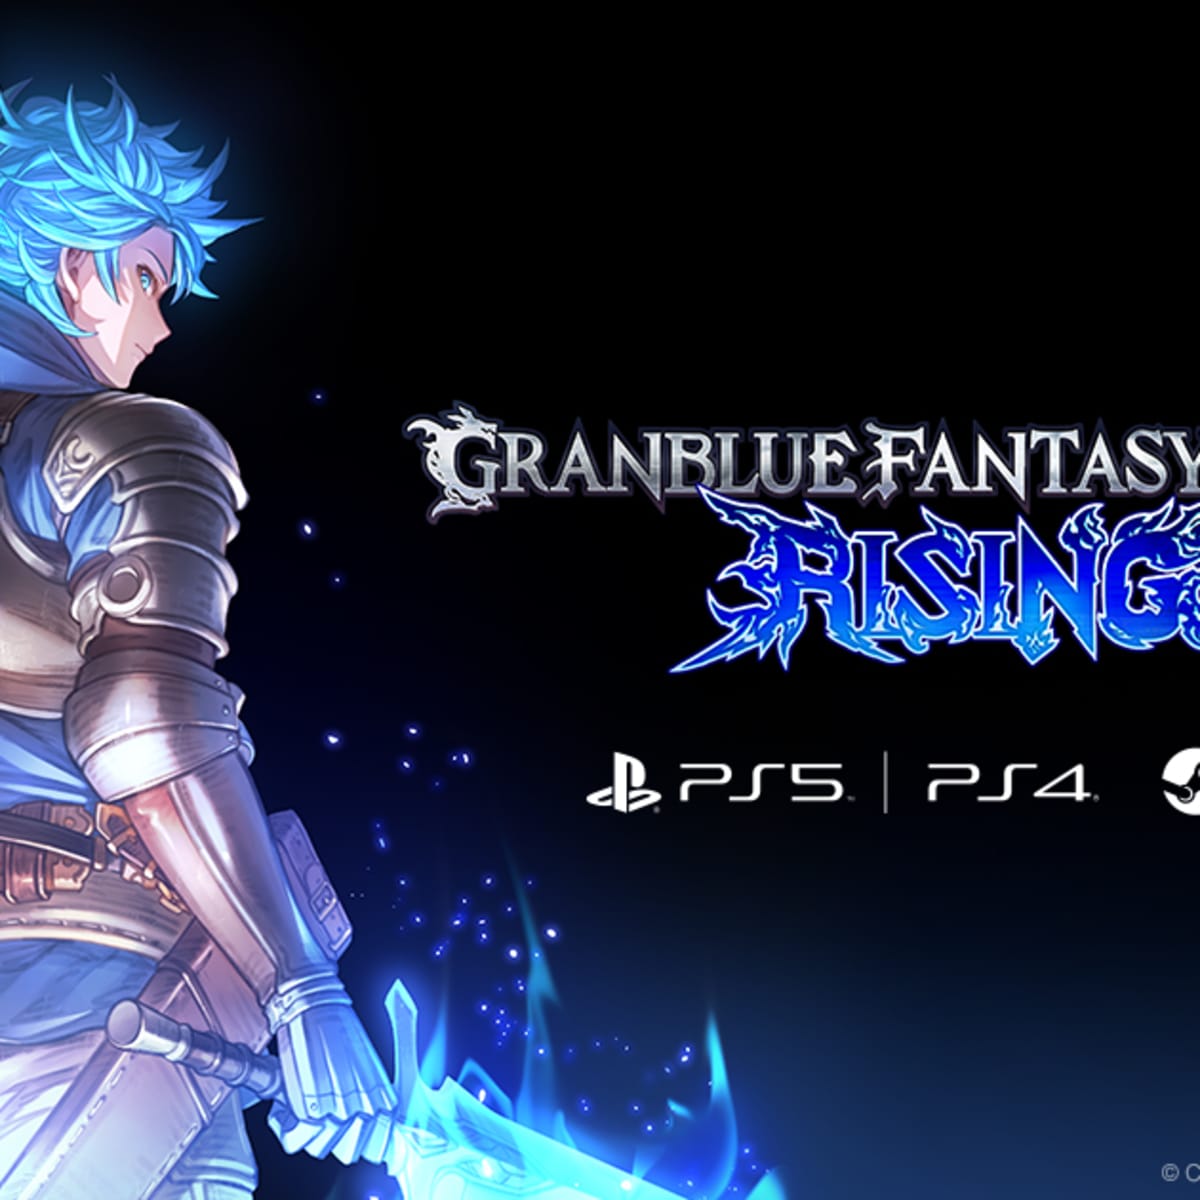 Granblue Fantasy Versus: Rising Reveals Anila as Playable